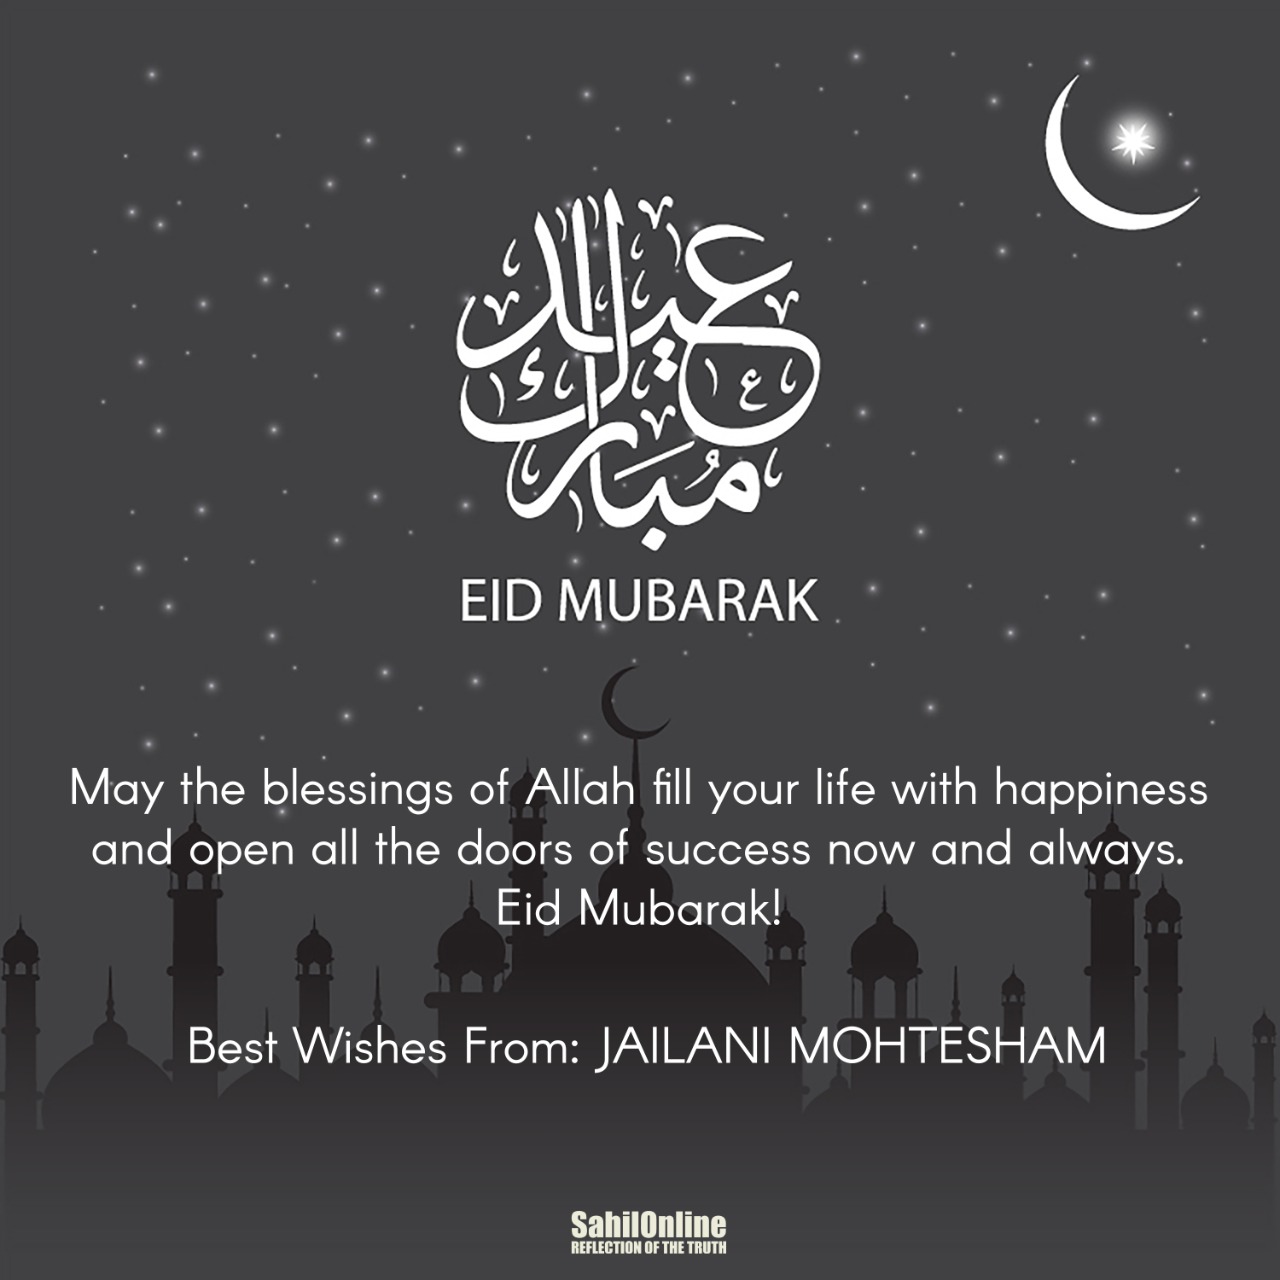 Eid Mubarak Meaning : Eid Mubarak 2020: Quotes, Wishes & Messages ...